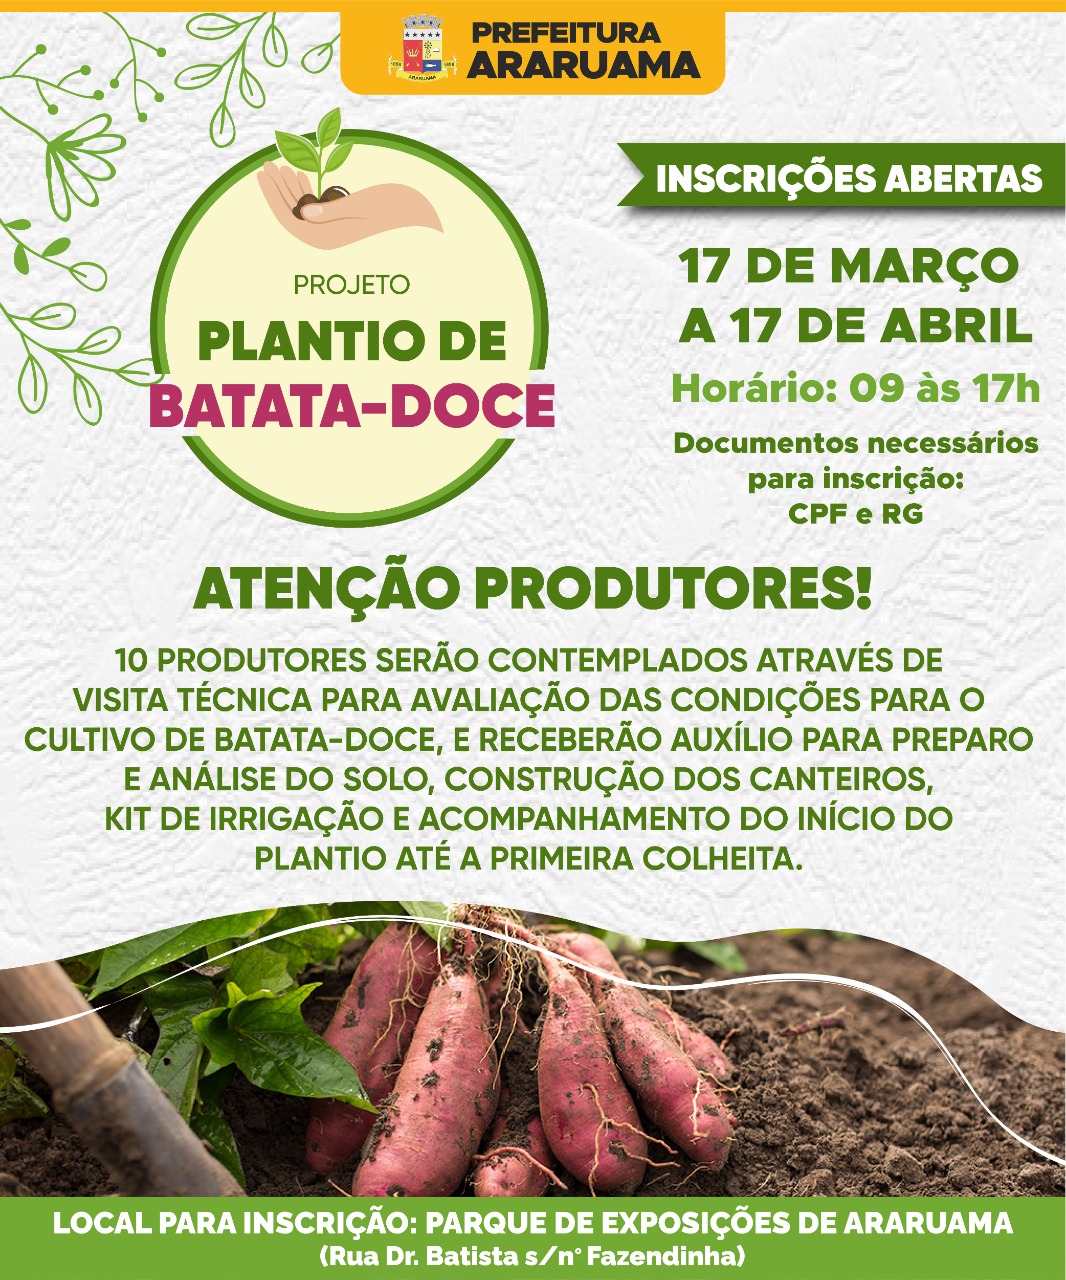 Prefeitura de Araruama vai selecionar agricultores para o projeto “Plantio de Batata-Doce”